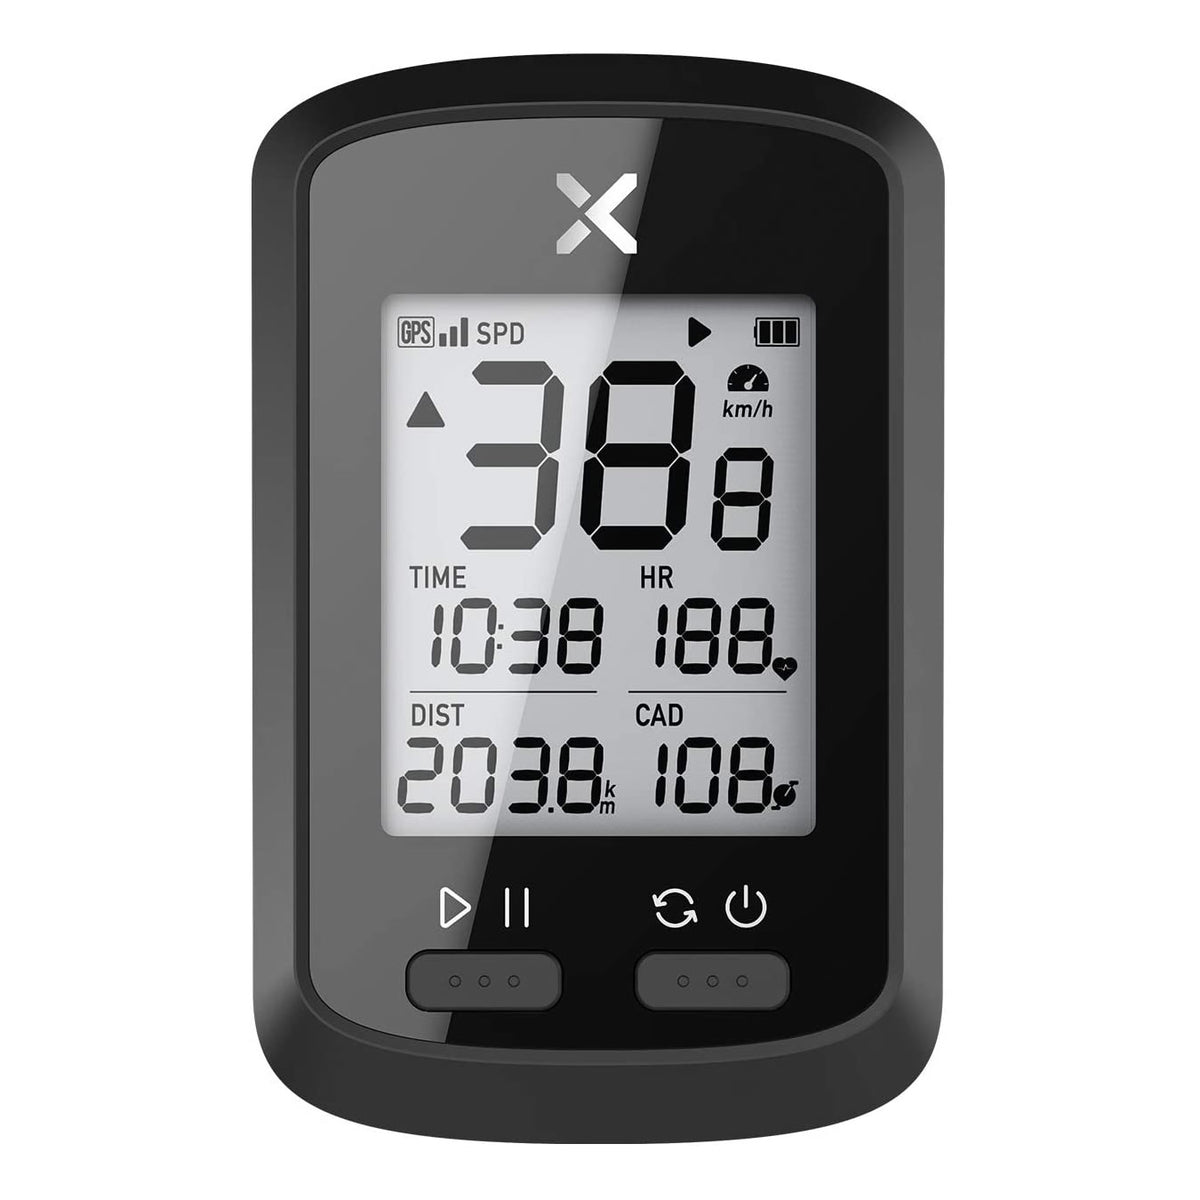 XOSS G+ GPS Bike Computer combo, with optional cadance and heart rate sensor - XOSS.CO